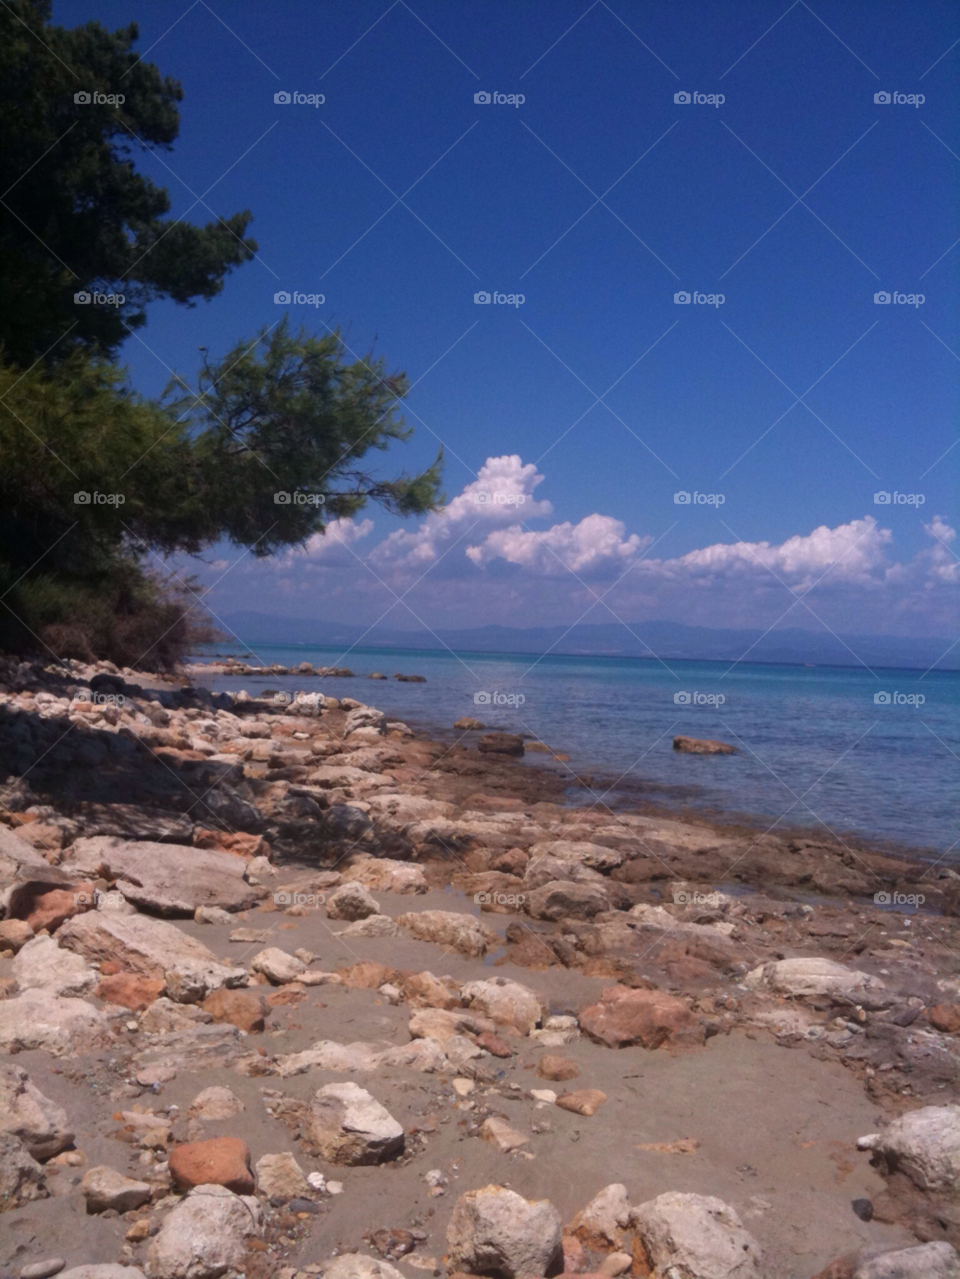 kalithea greece mainland greece halkidiki peninsula kalithea  beach by zippypitt